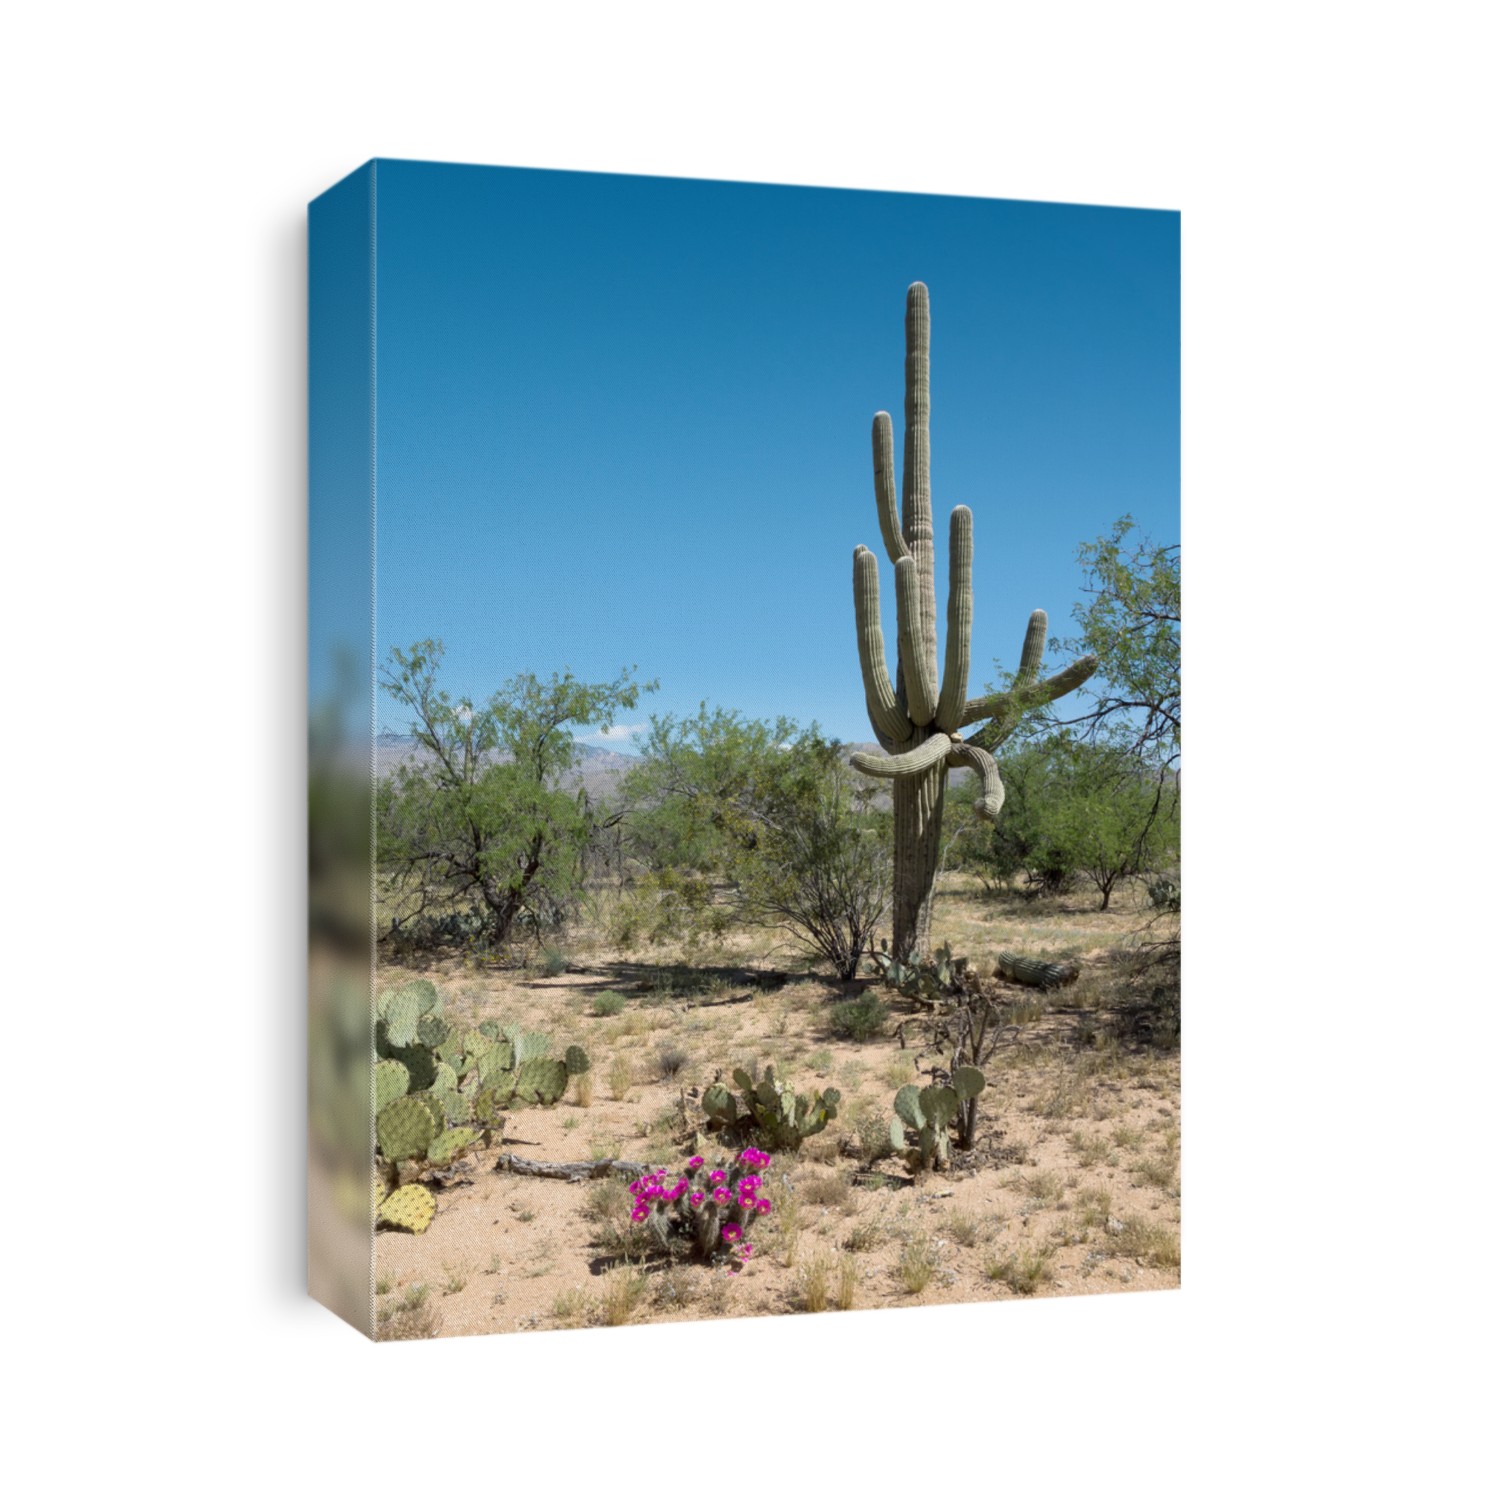 Carnegiea gigantea and flowering Strawberry Hedgehog Cactus (Echinocereus engelmannii). Saguaro National Park, Arizona, USA